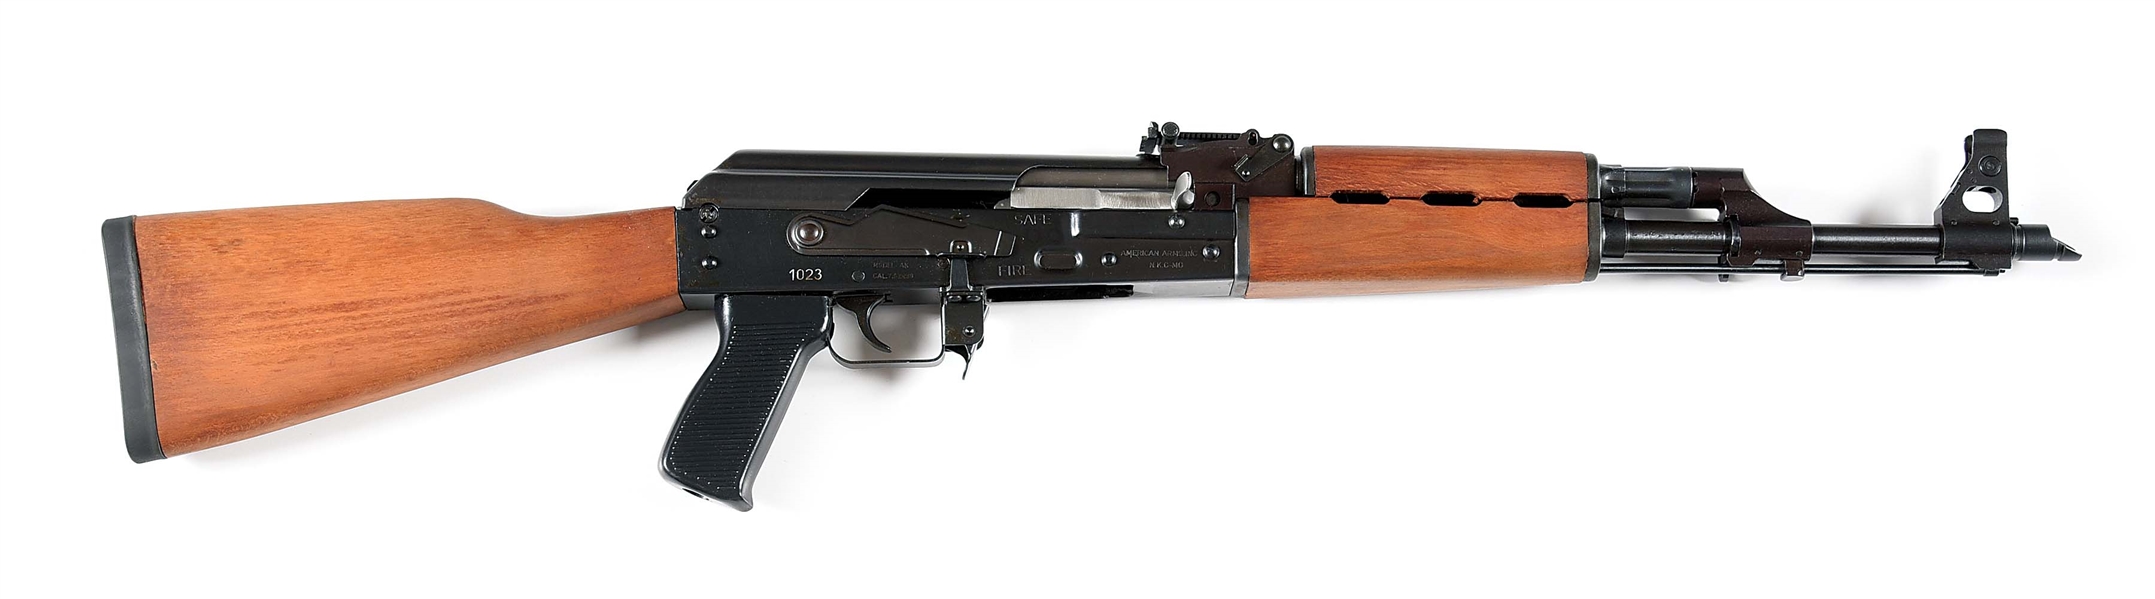 (M) PREBAN YUIGOSLAVIAN ZASTAVA AK-47 SEMI AUTOMATIC RIFLE.